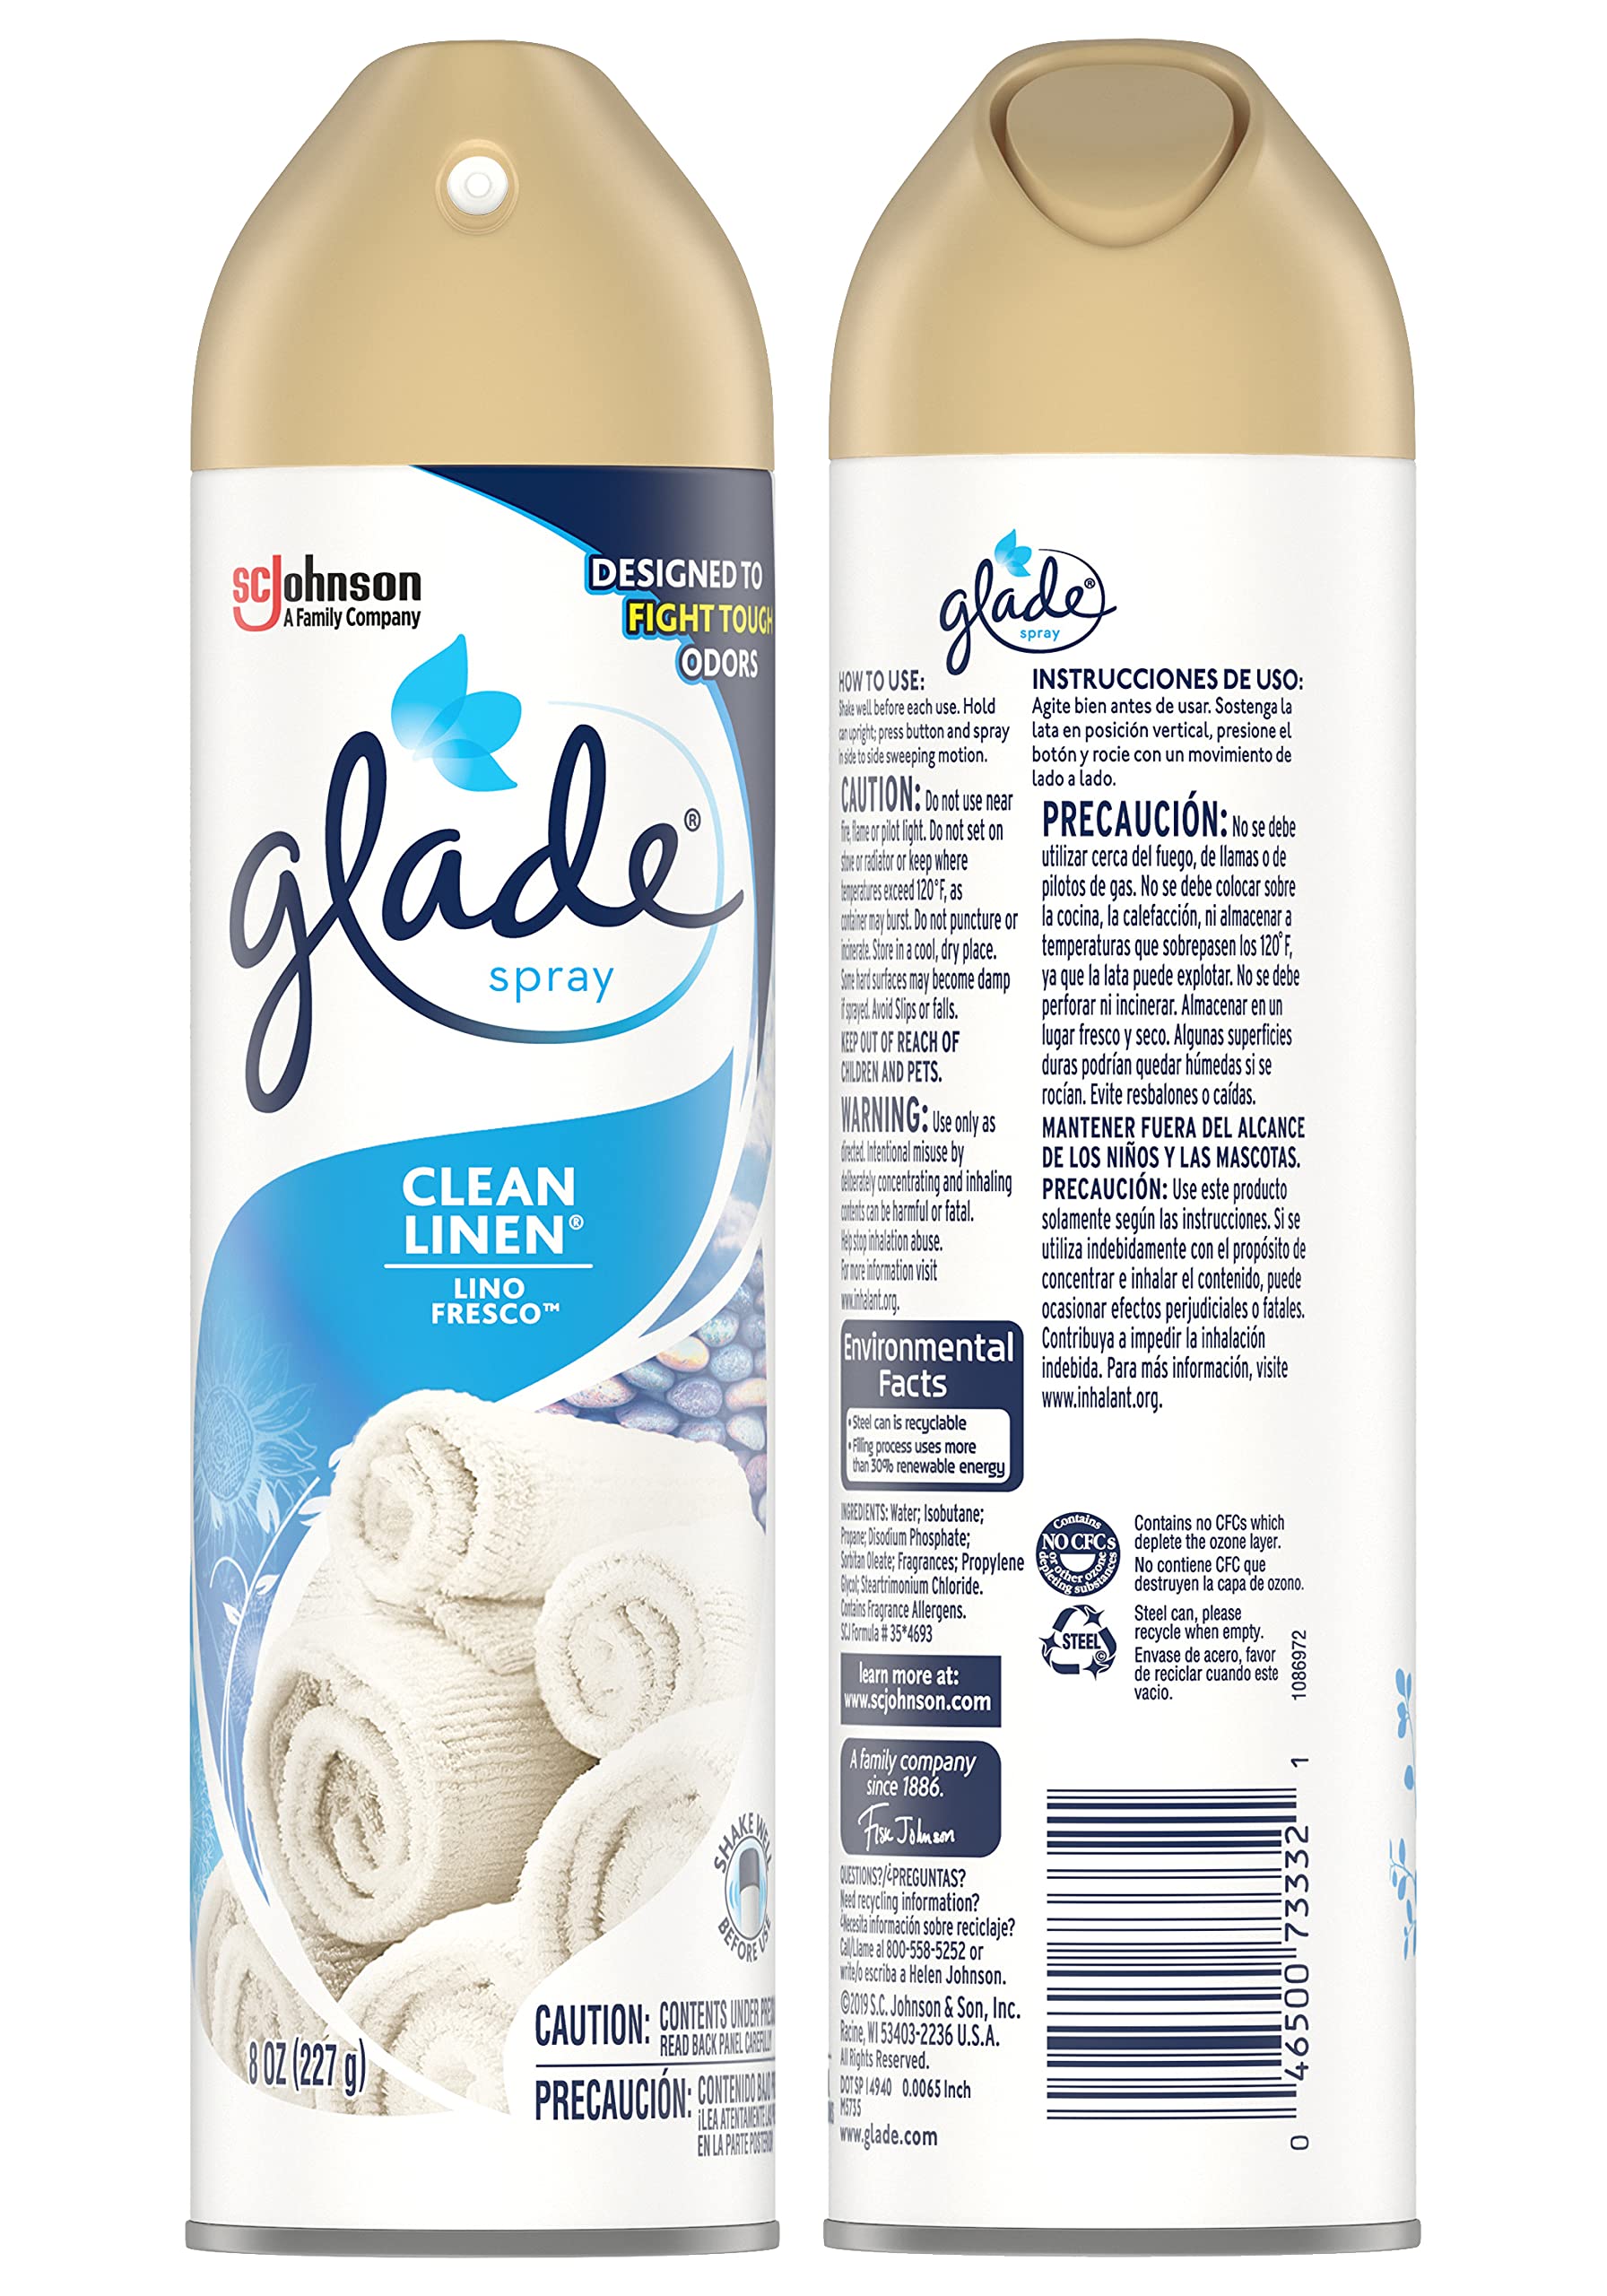 Glade Aerosol Air Freshener Clean Linen, 8 OZ (Pack of 6)